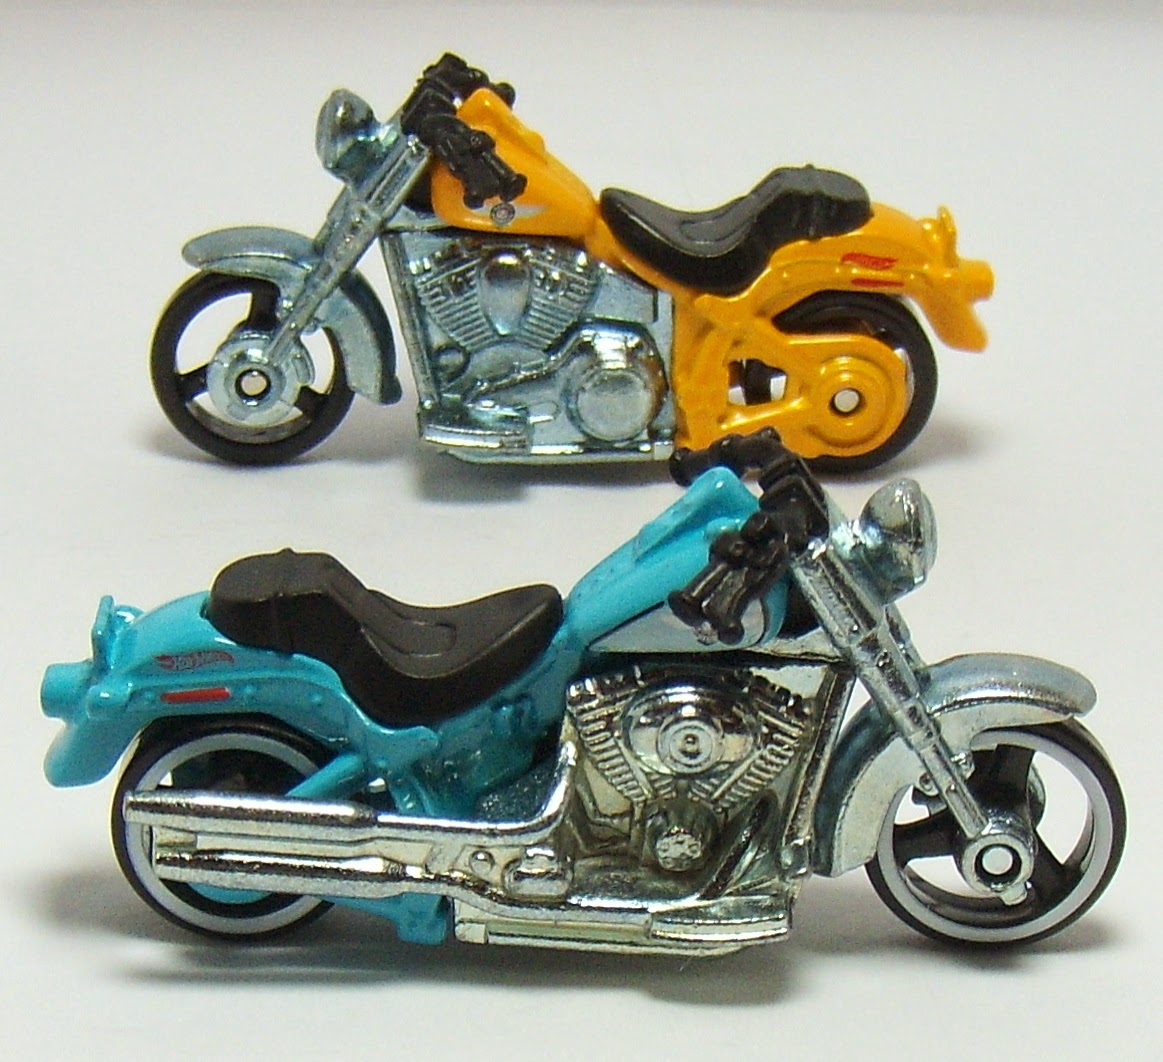 Terpopuler 40 Harley Davidson Fat Boy Hot Wheels